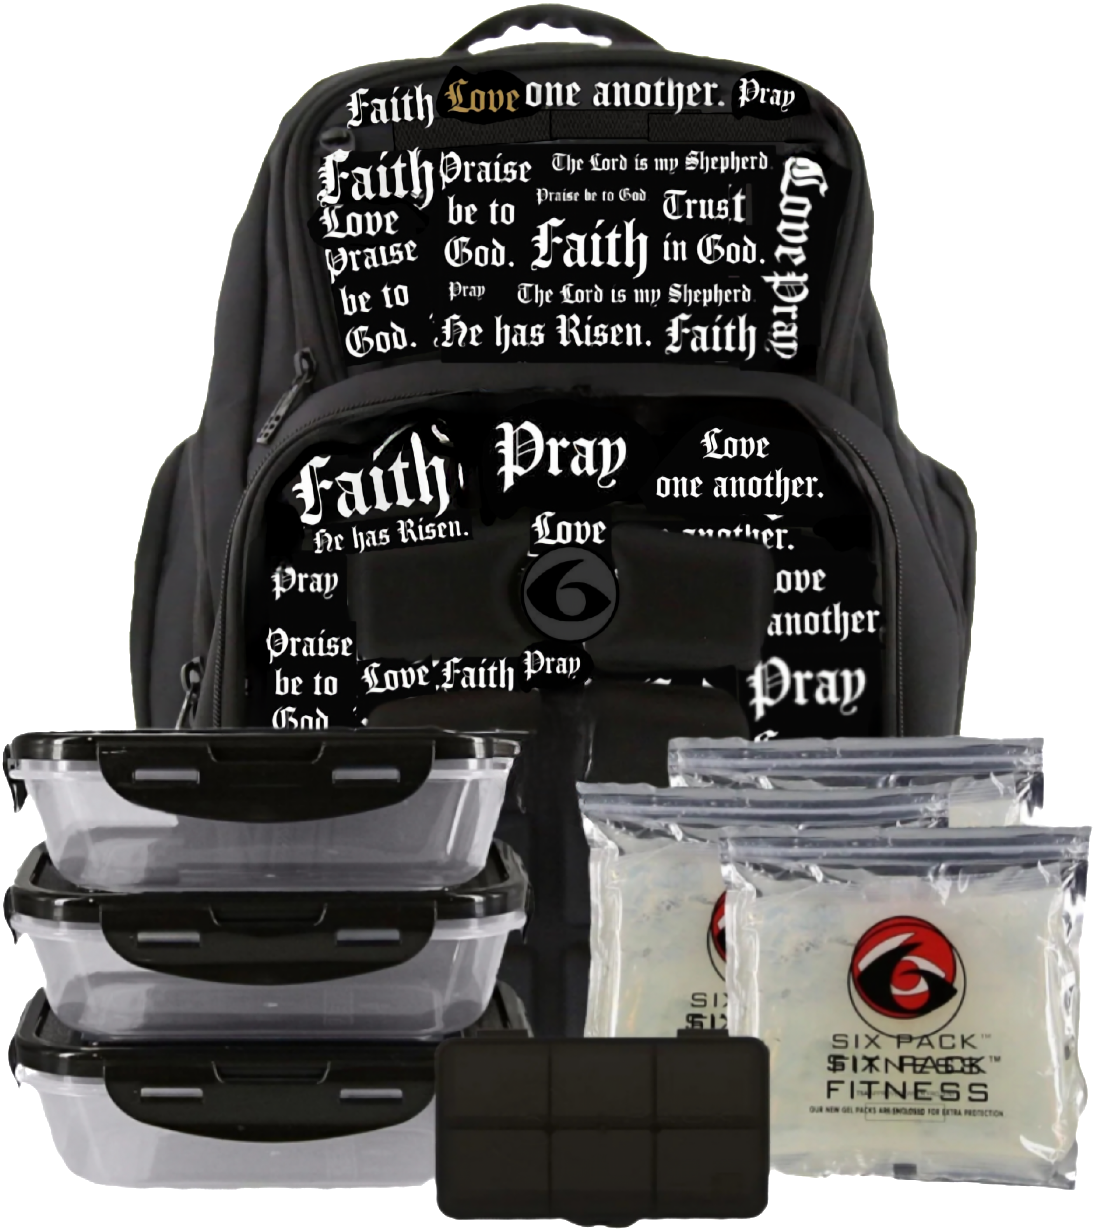 Pre-Order Scripture Innovator Expedition 300 Black/White Backpack Meal Prep